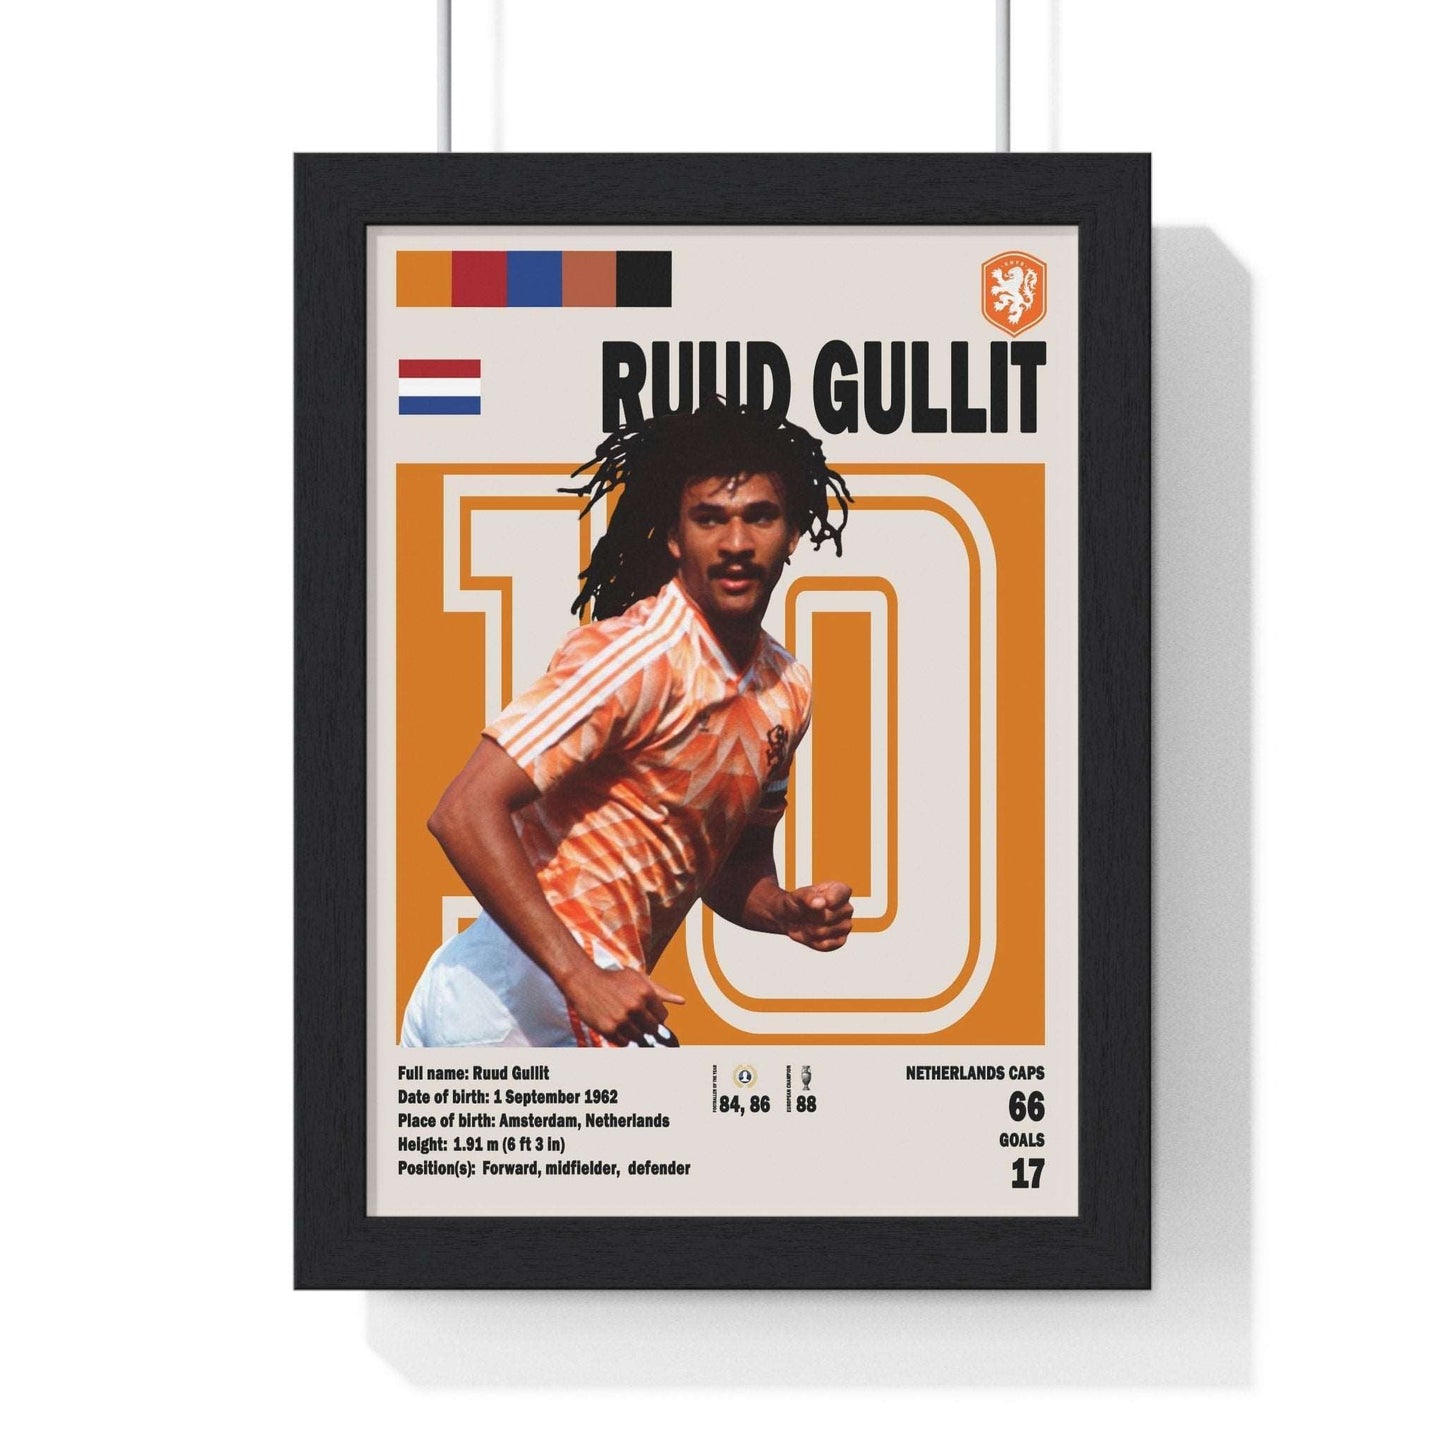 Ruud Gullit Poster - Poster Kingz